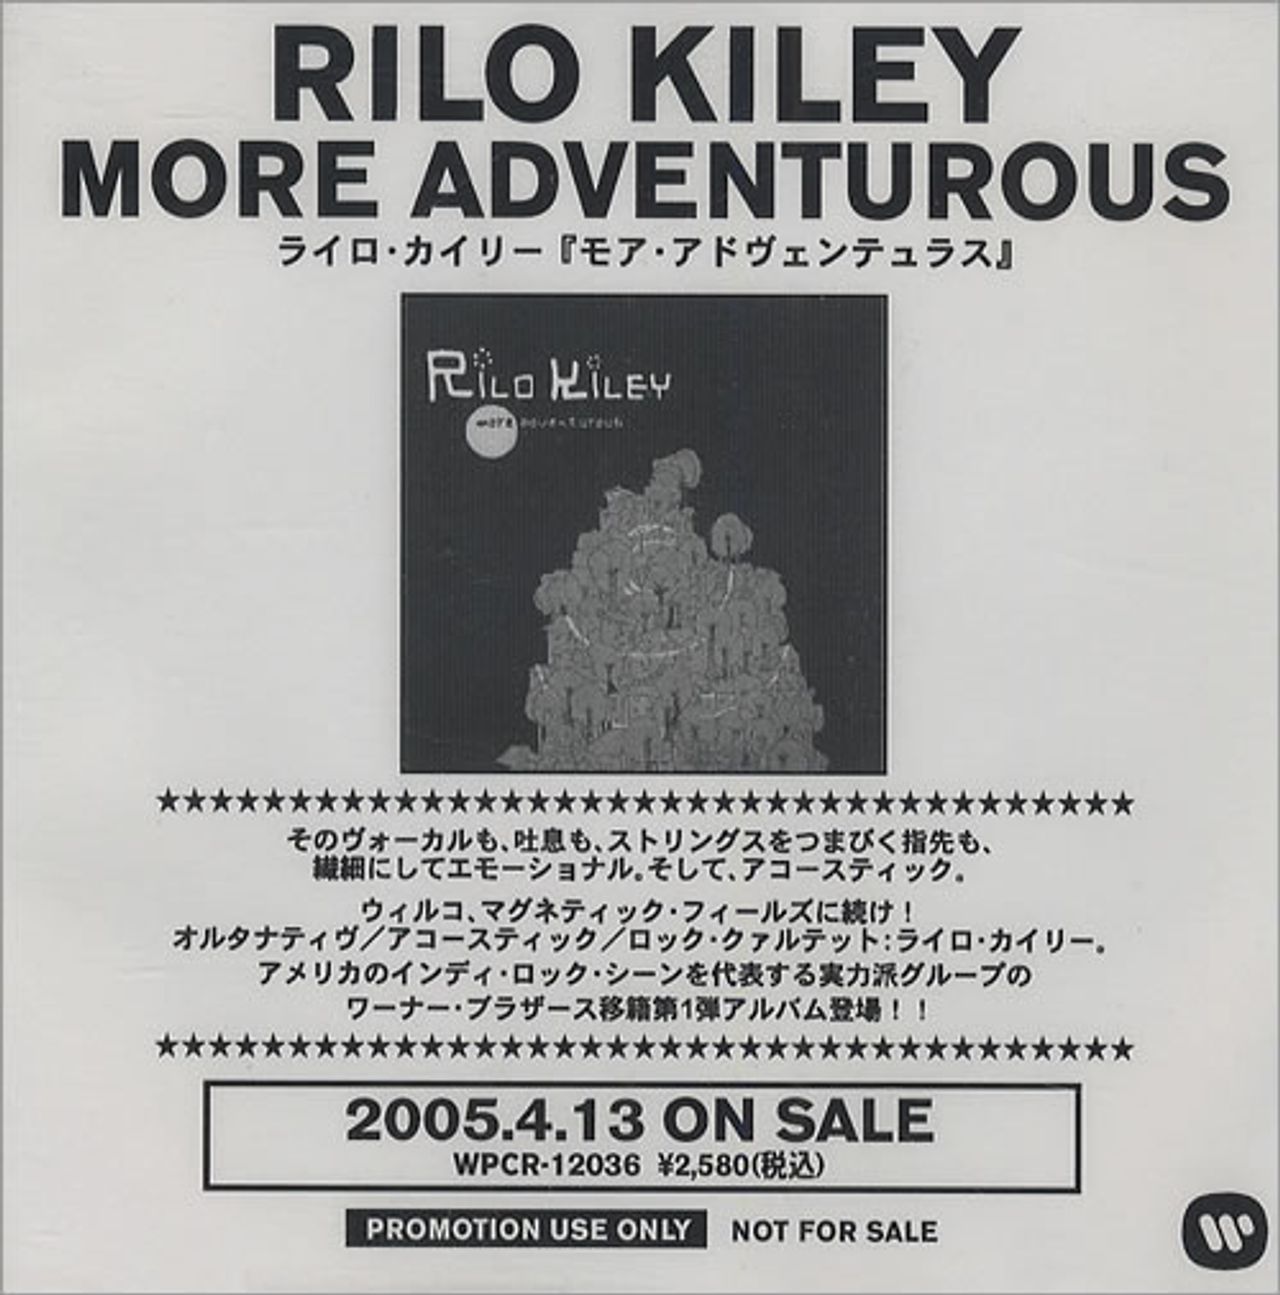 Rilo Kiley More Adventurous Japanese Promo CD-R acetate CD-R ACETATE